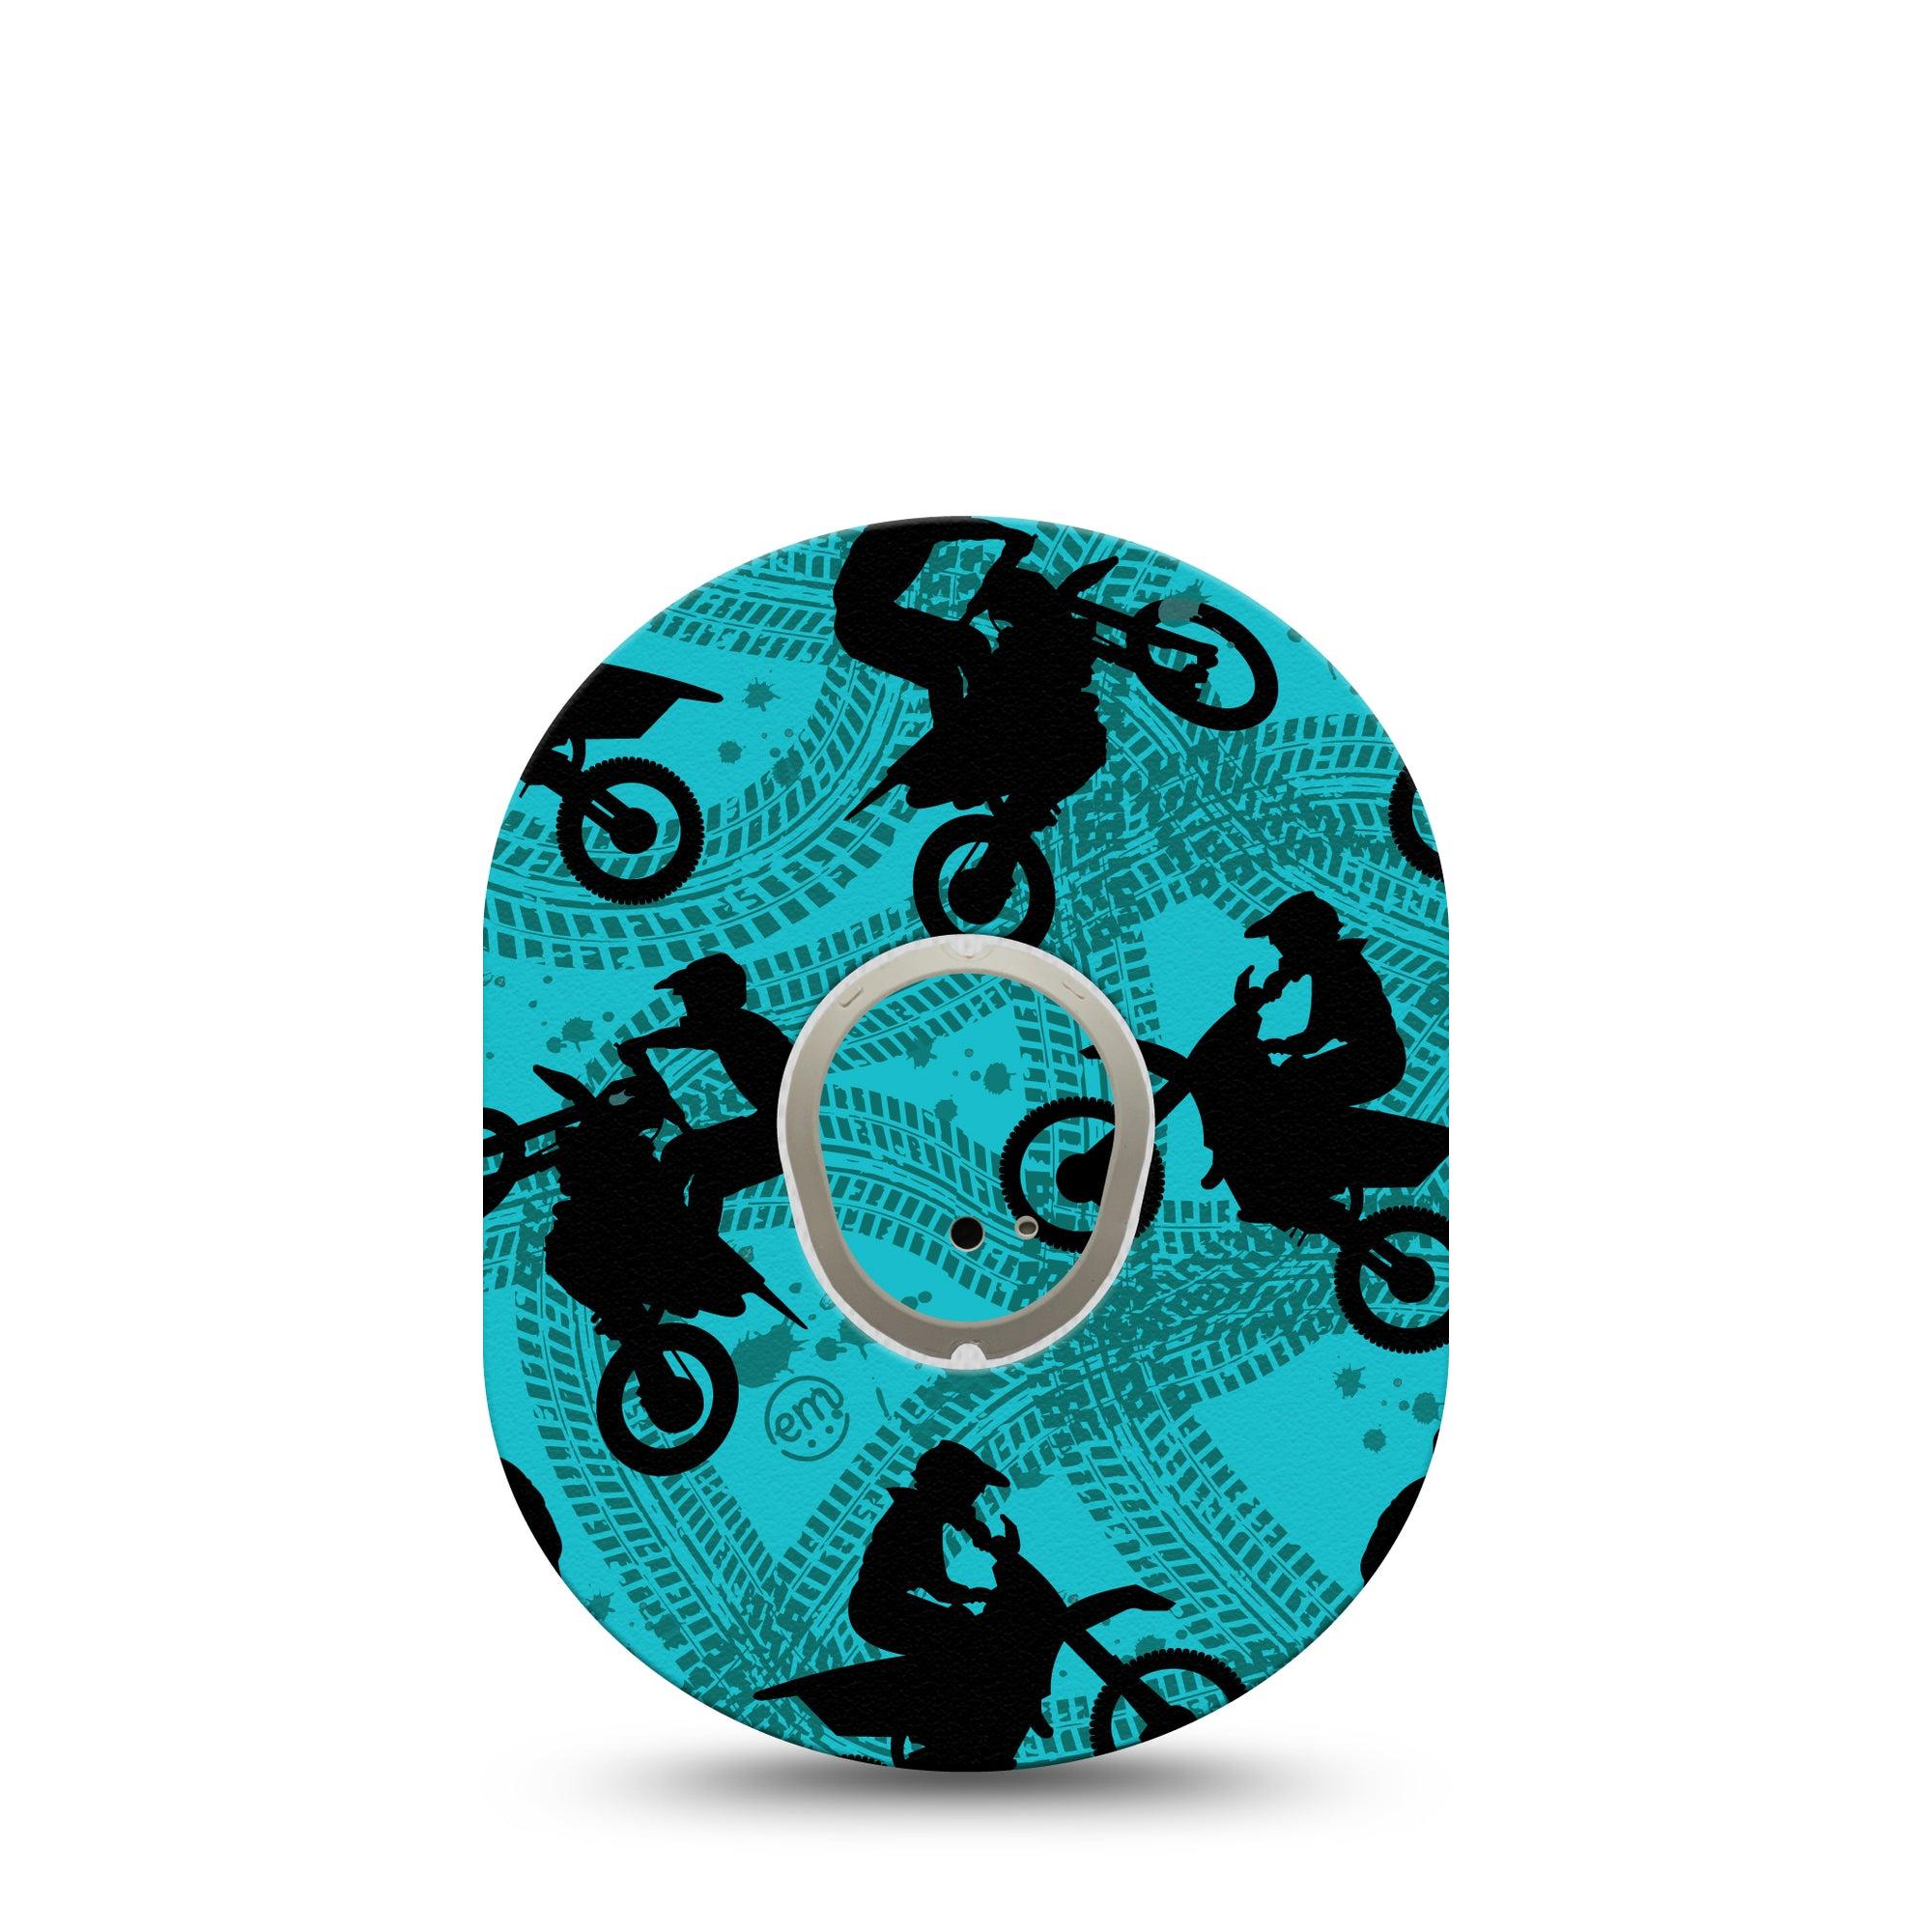 ExpressionMed Dirt Bikes Dexcom G7 Transmitter Sticker, Single, Motocross Inspired, Dexcom G7 Vinyl Center Sticker, With Matching Dexcom G7 Tape, CGM Overlay Patch Design